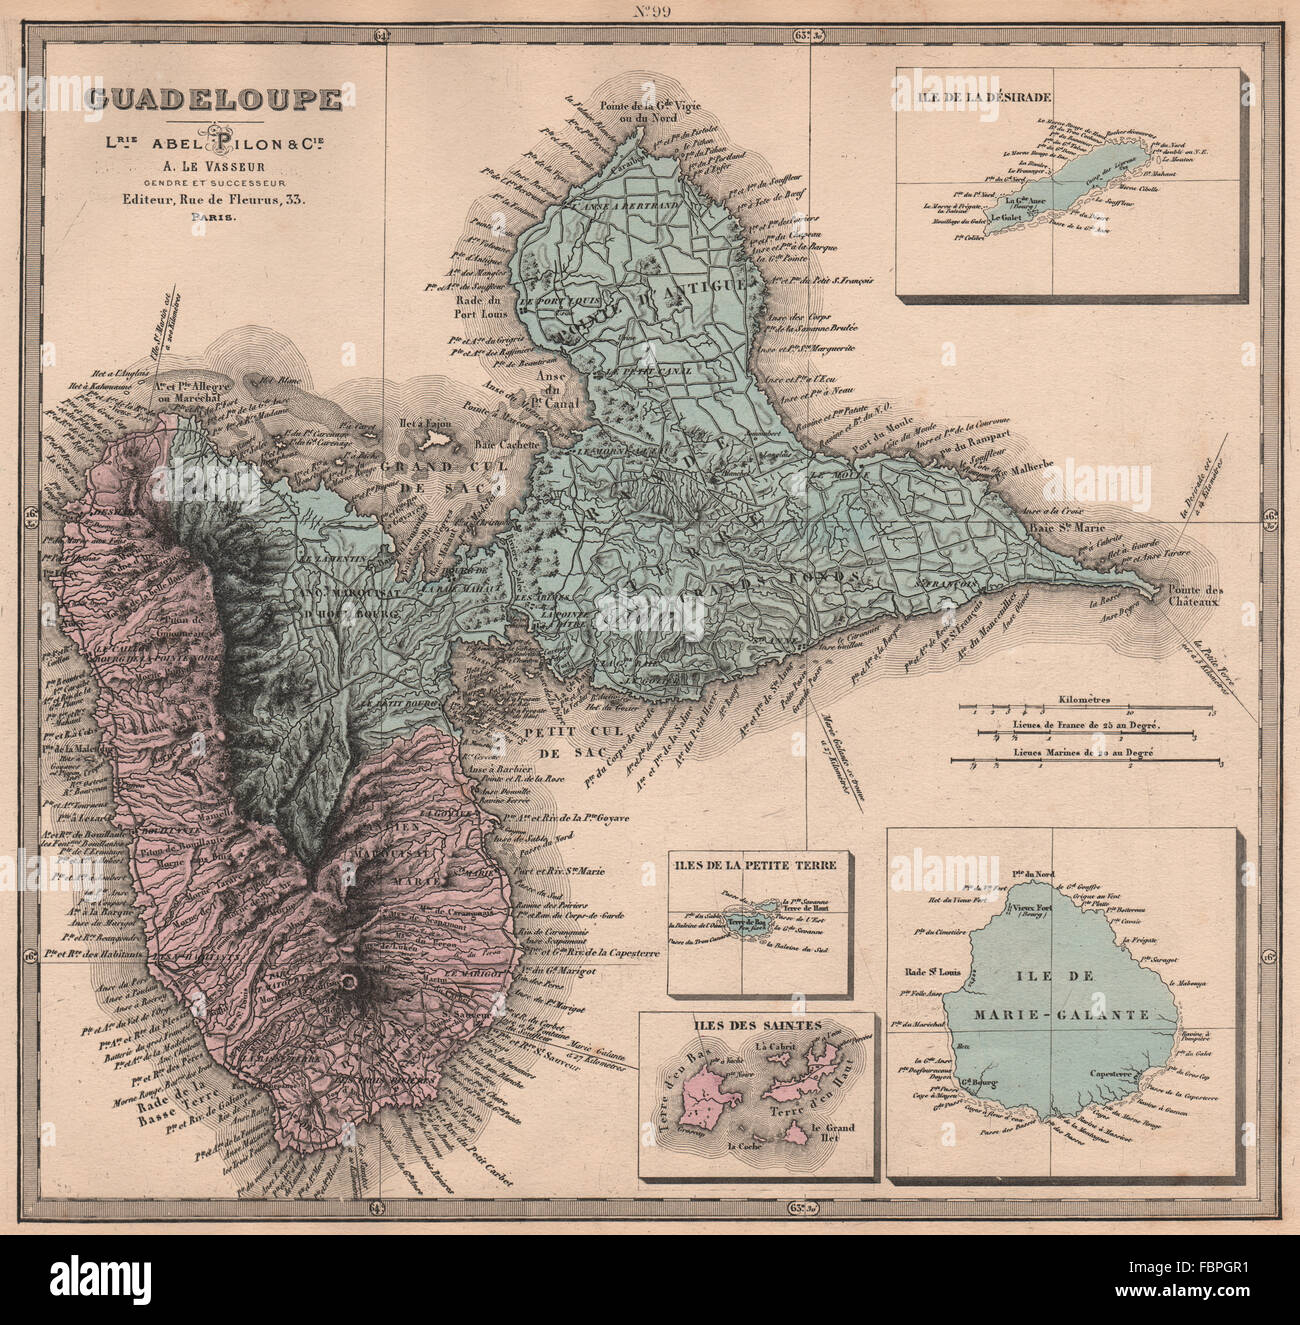 Ile de GUADELOUPE Marie-Galante Saintes Désirade. Antillen Françaises, 1876-Karte Stockfoto